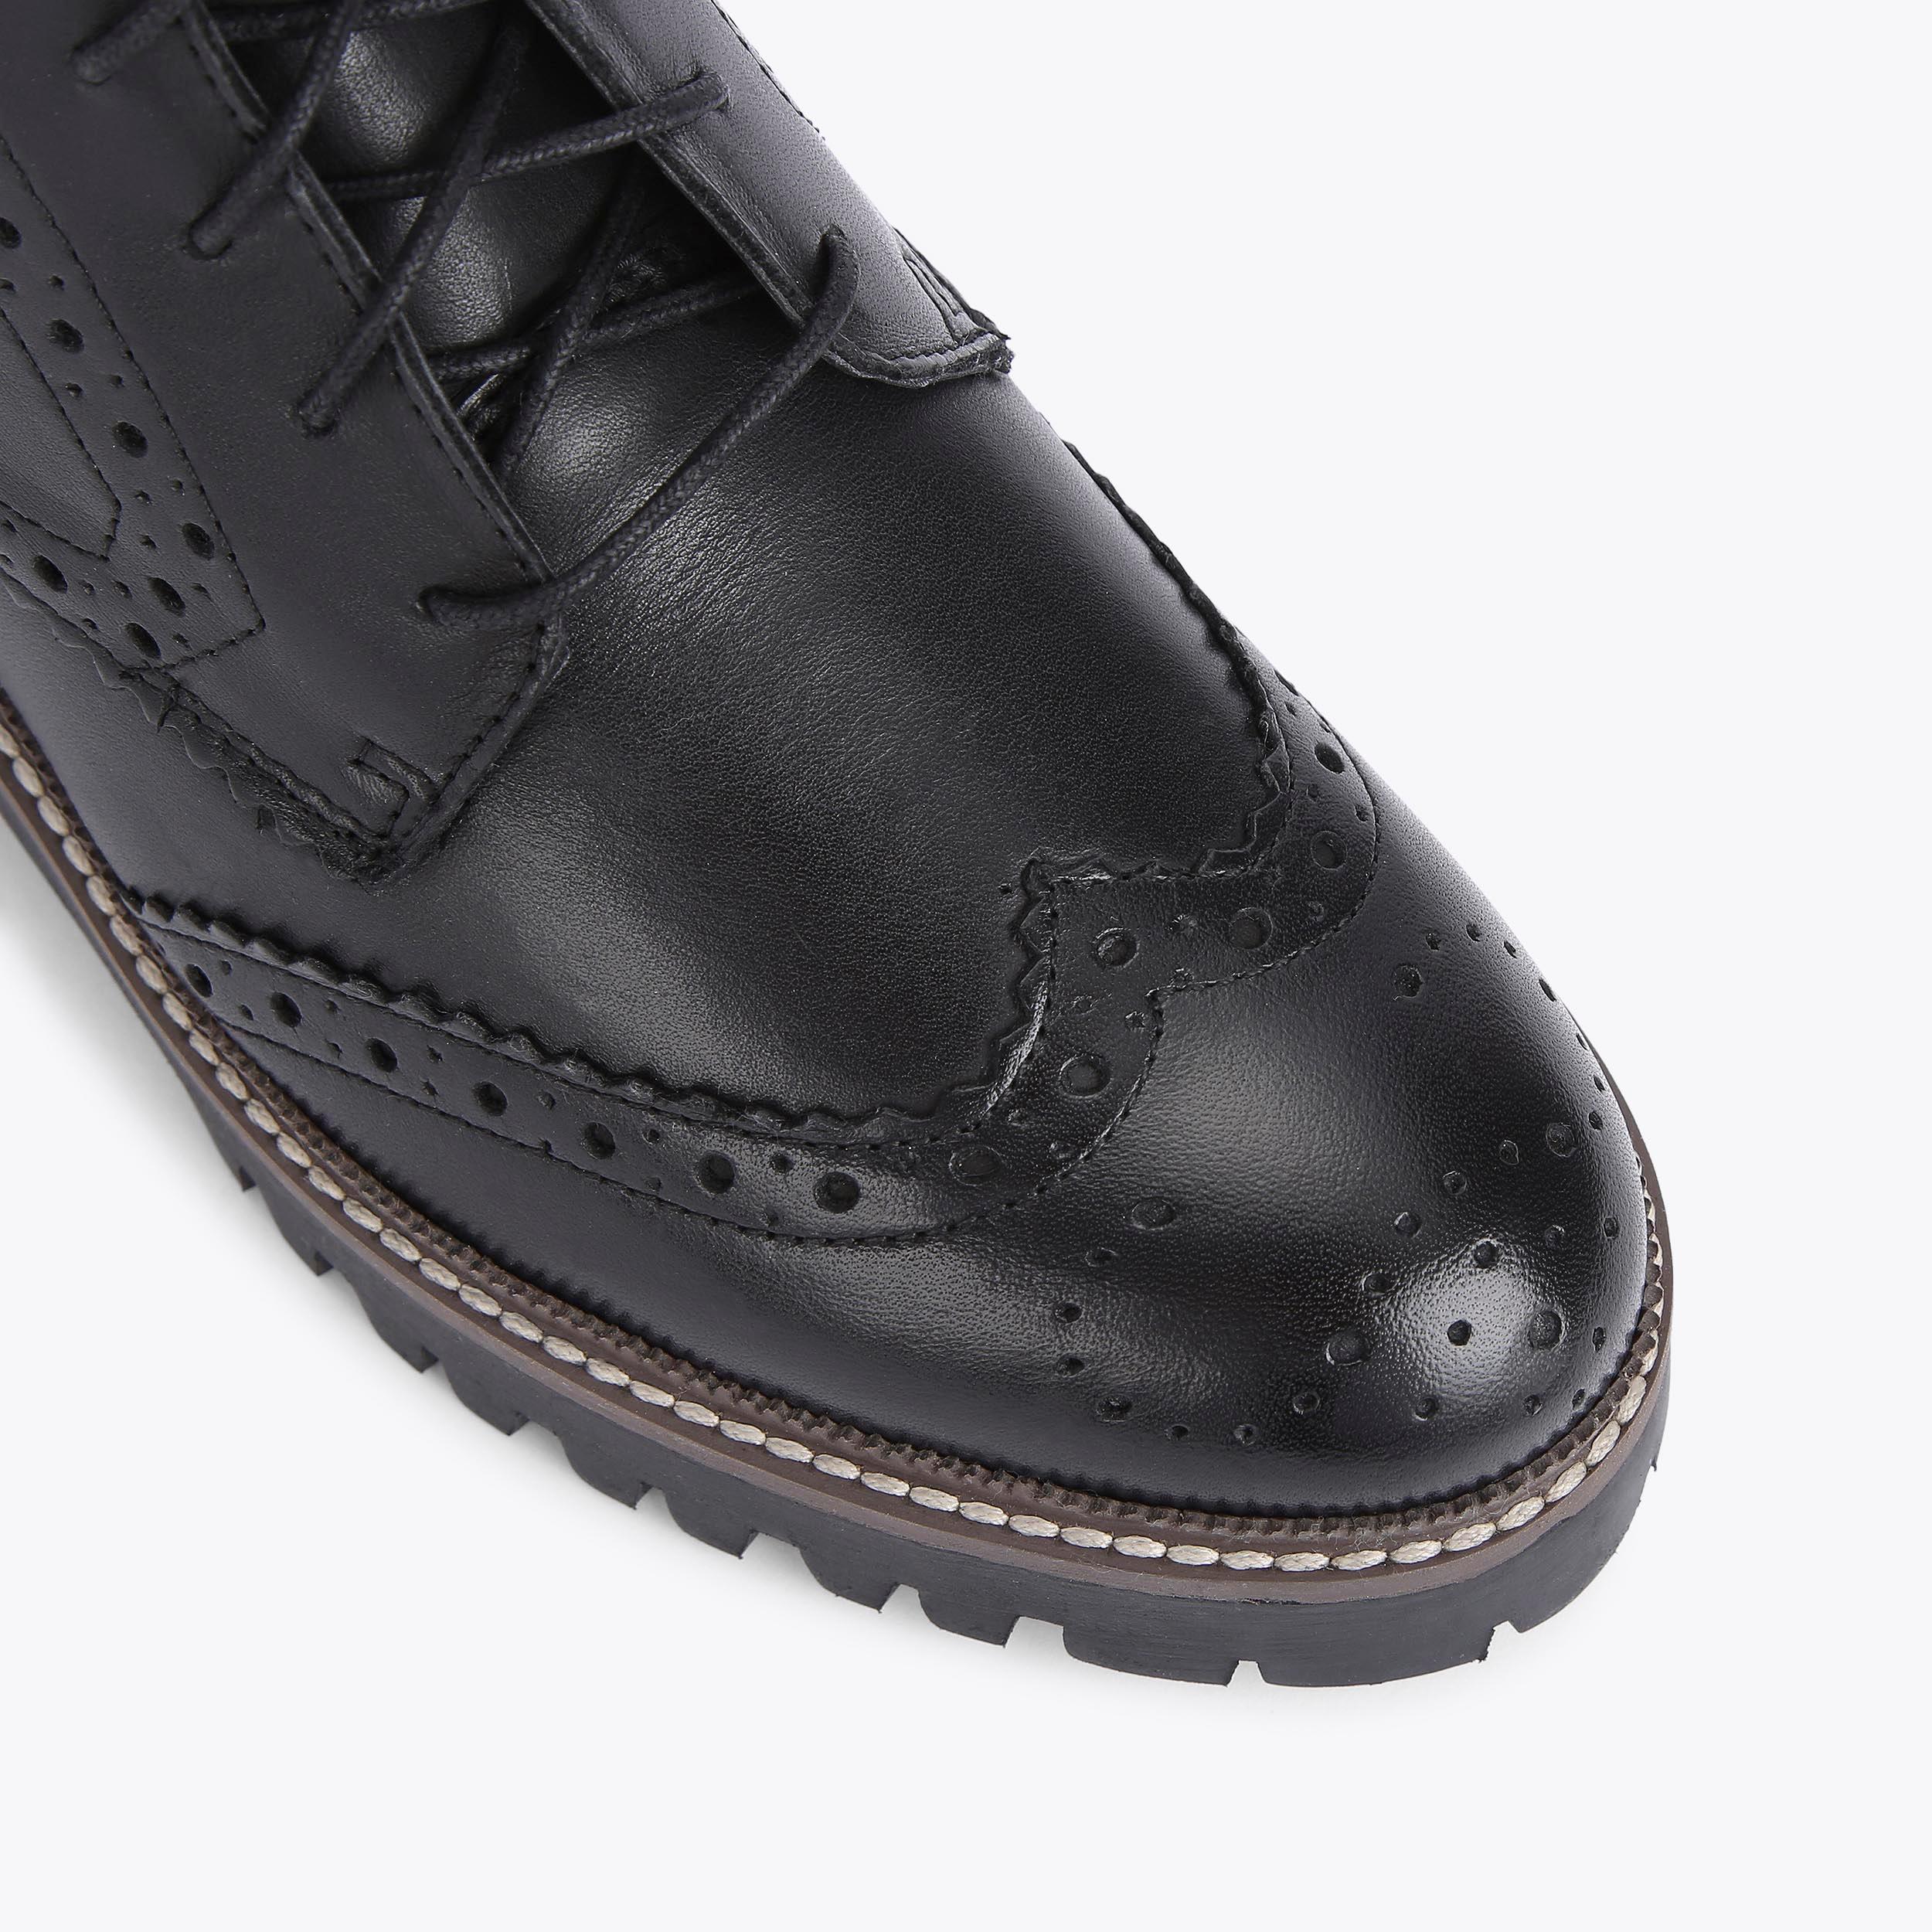 SOFIA Black Brogue Lace Up Ankle Boots by KG KURT GEIGER